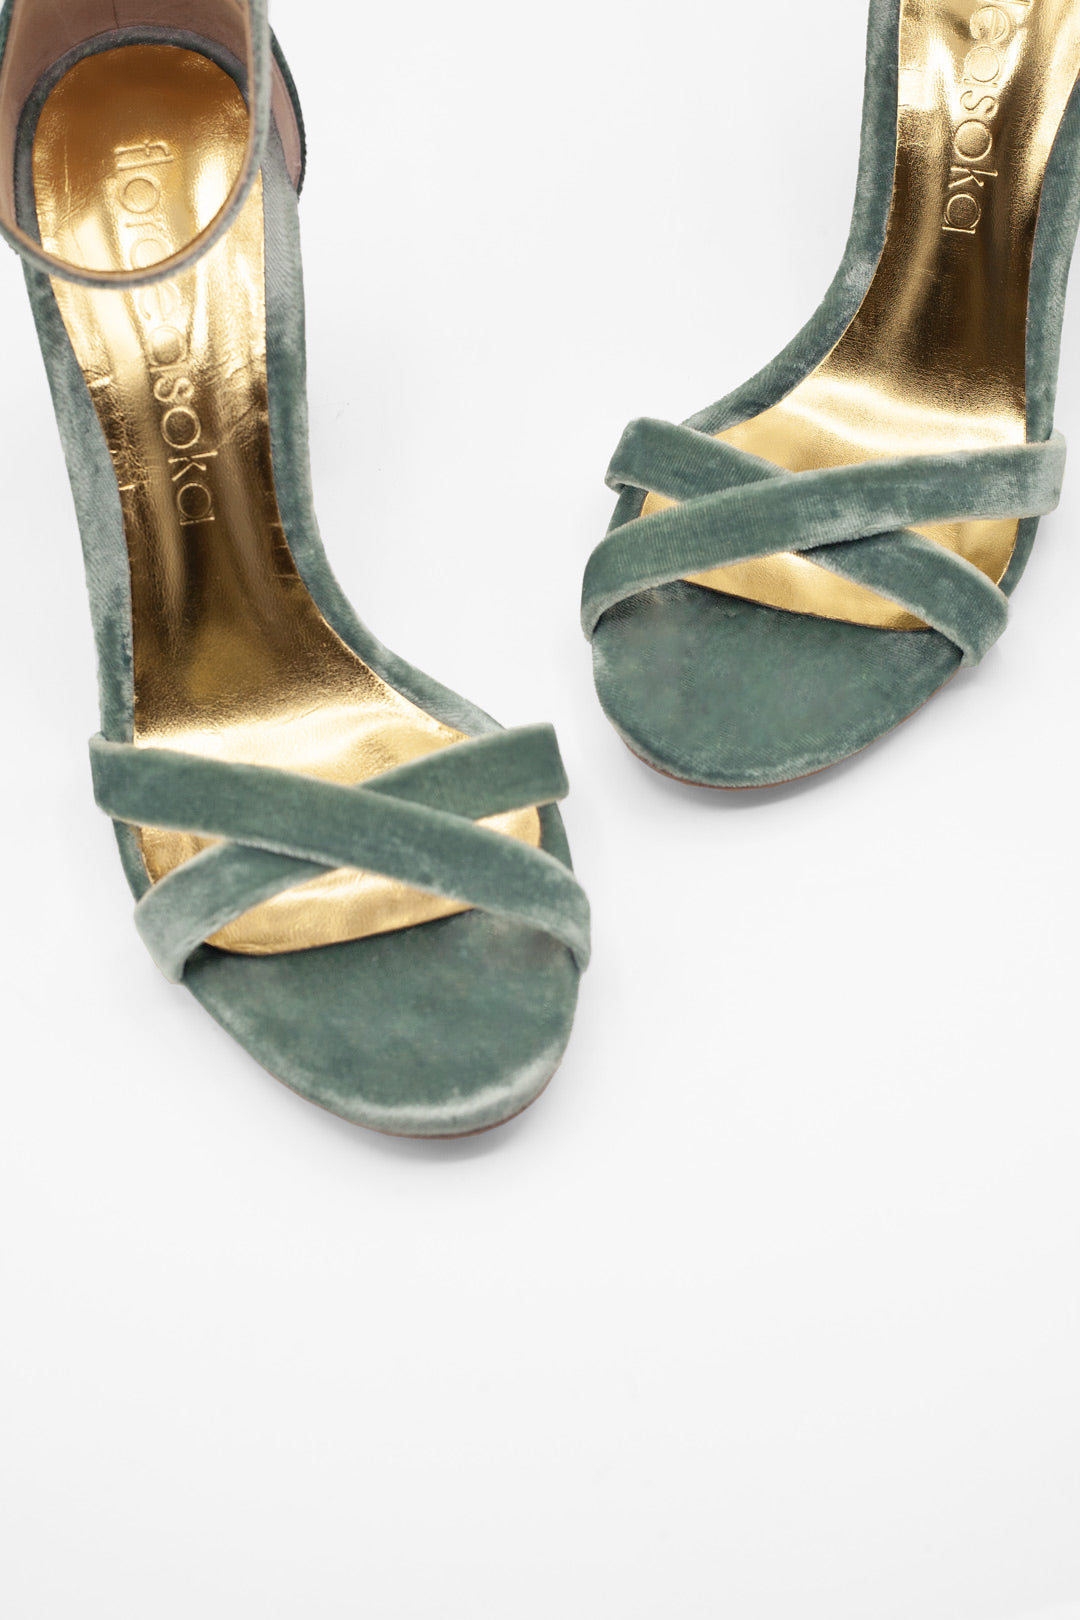 Sandalias elegantes cómodas para novias perfectas como tacones de fiesta verdes azules